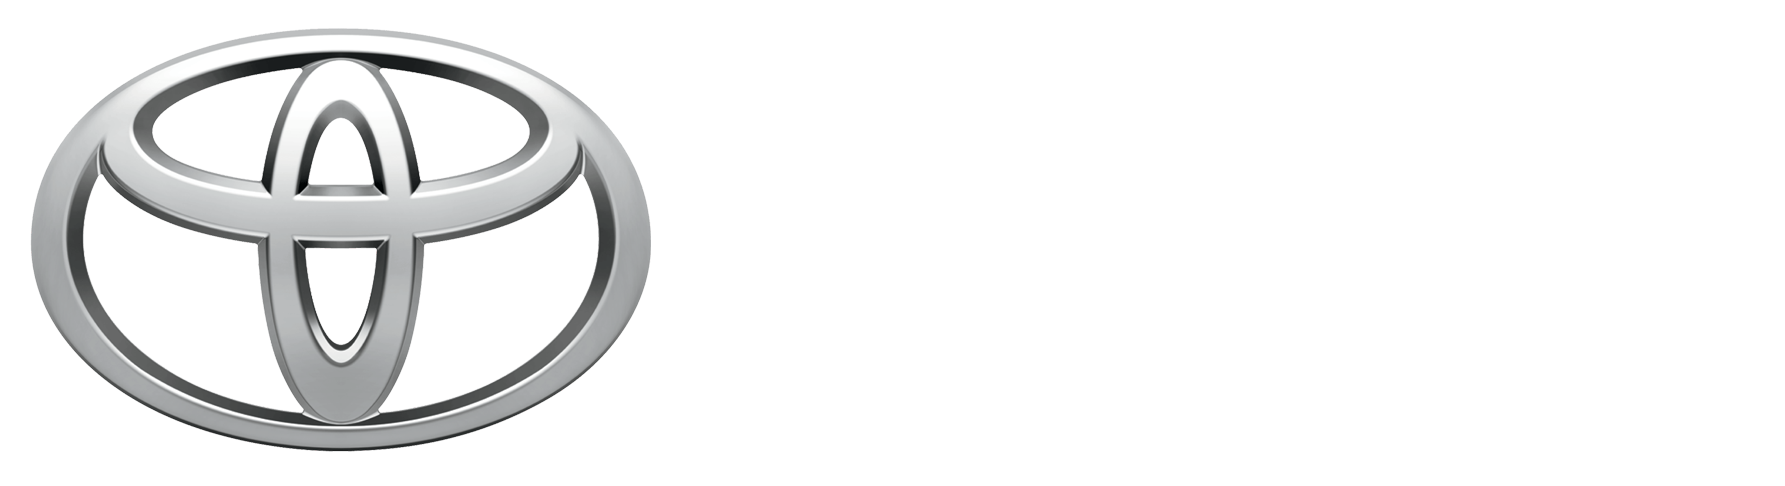 Bosetti Automotores «